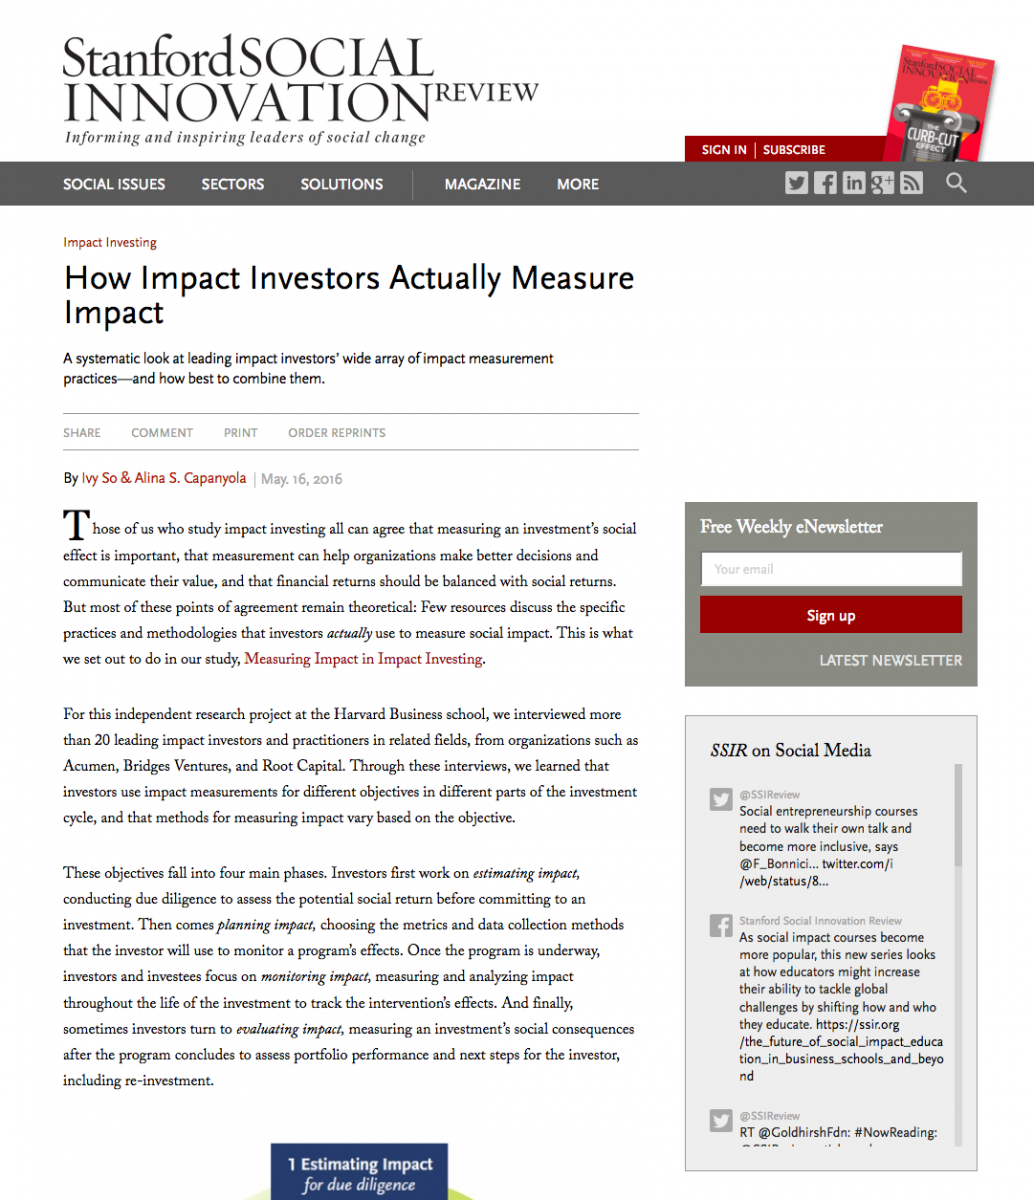 how-impact.investors-actually-measure-impact